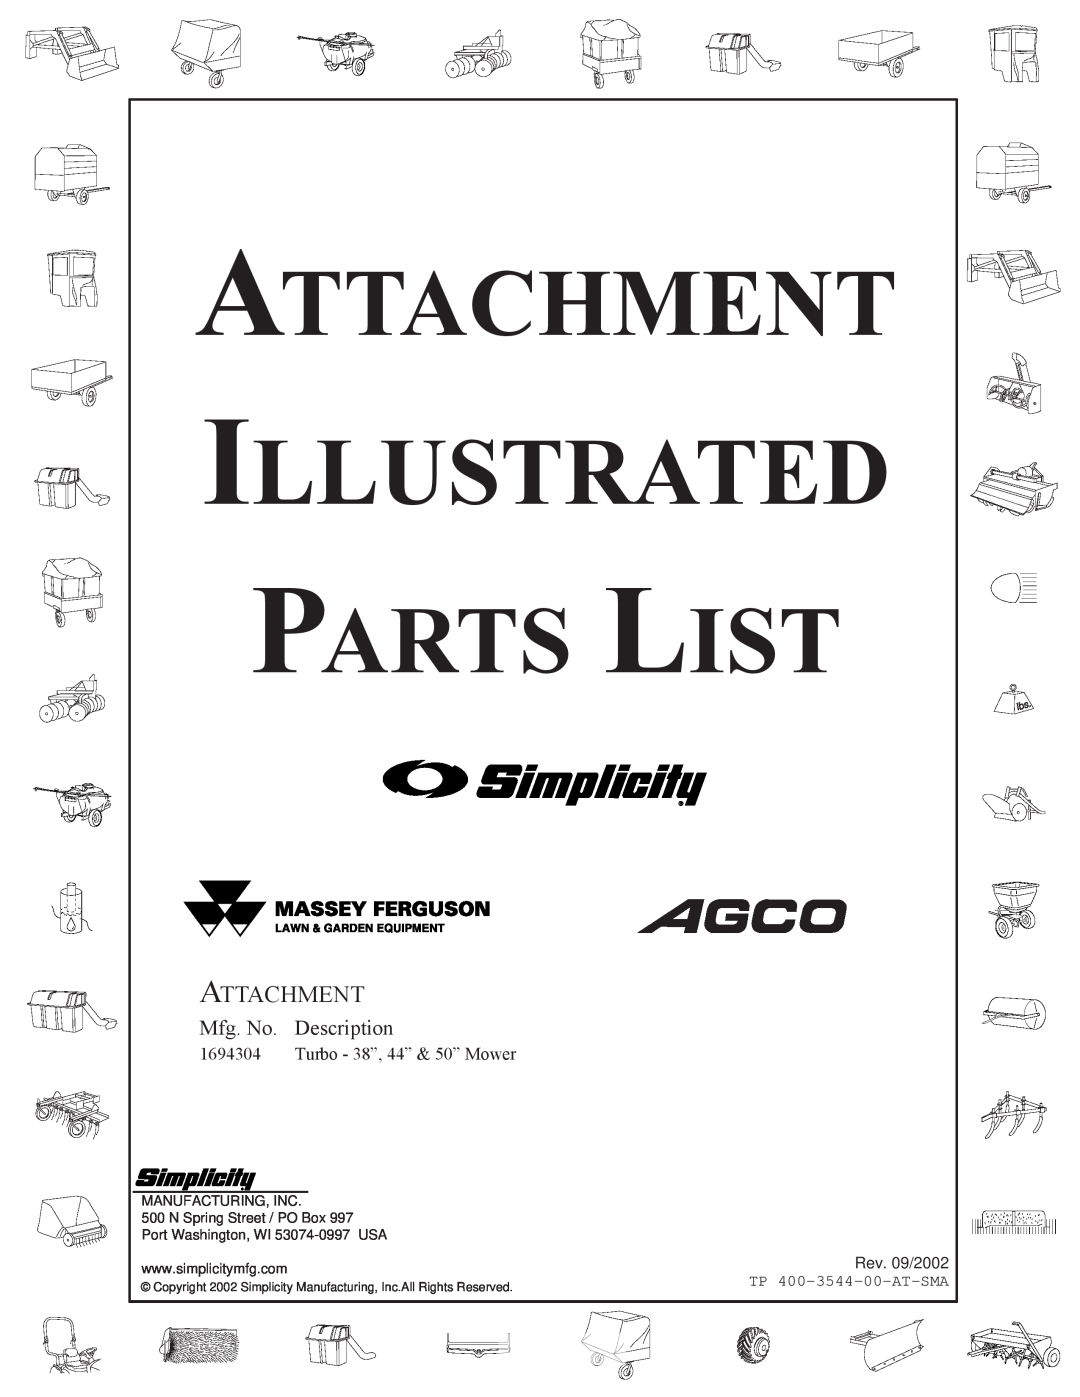 Snapper 3544 manual Attachment Illustrated Parts List, Mfg. No. Description, Turbo - 38”, 44” & 50” Mower, Rev. 09/2002 